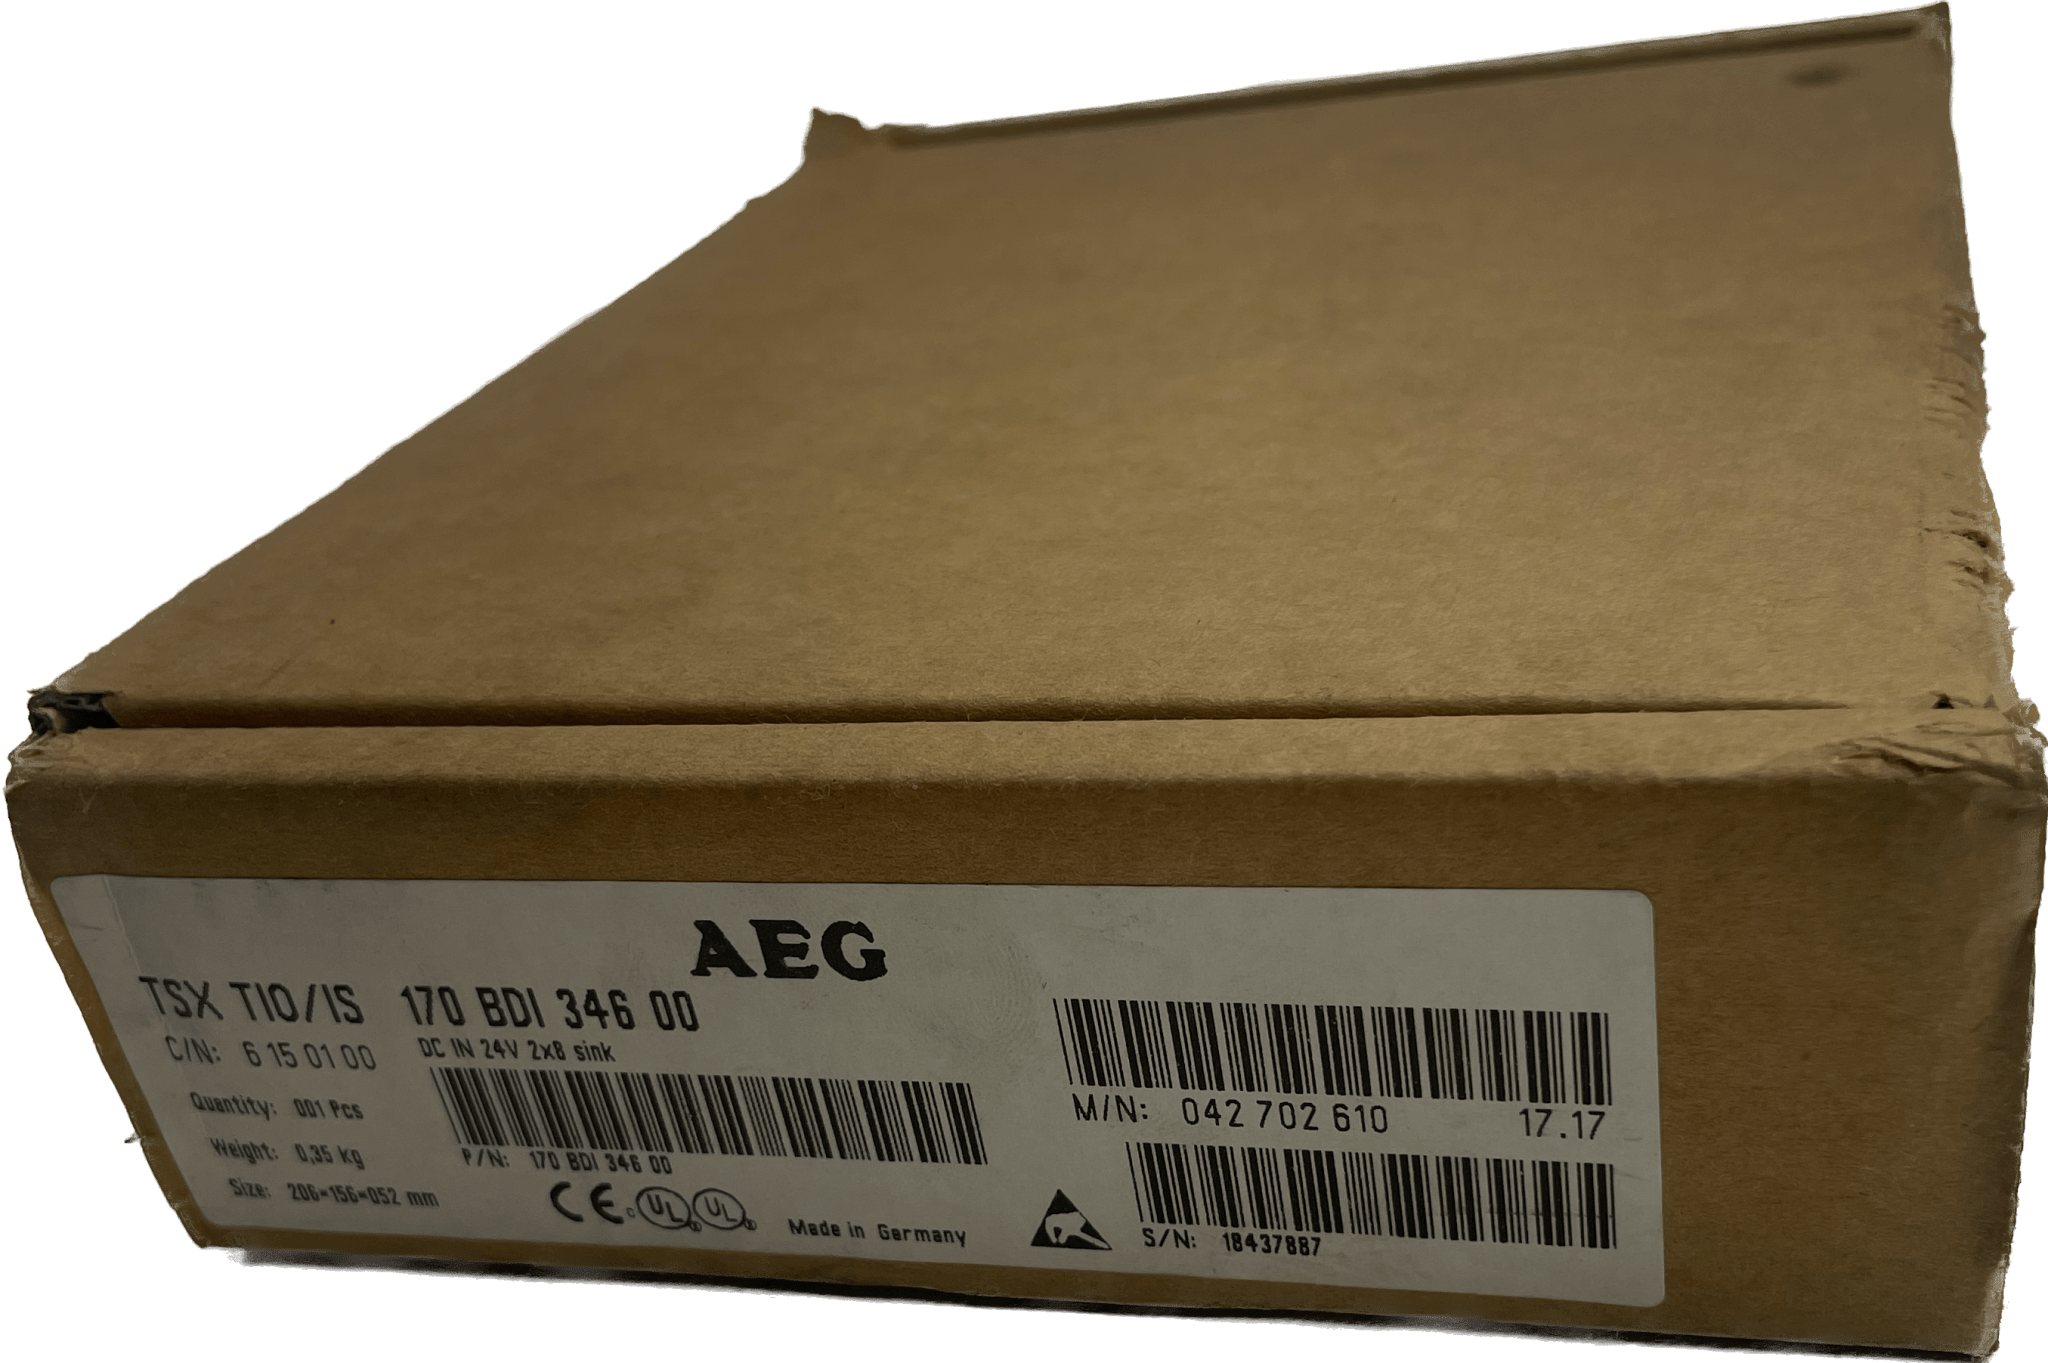 AEG Modicon 170 BDI 346 00 - #product_category# | Klenk Maschinenhandel